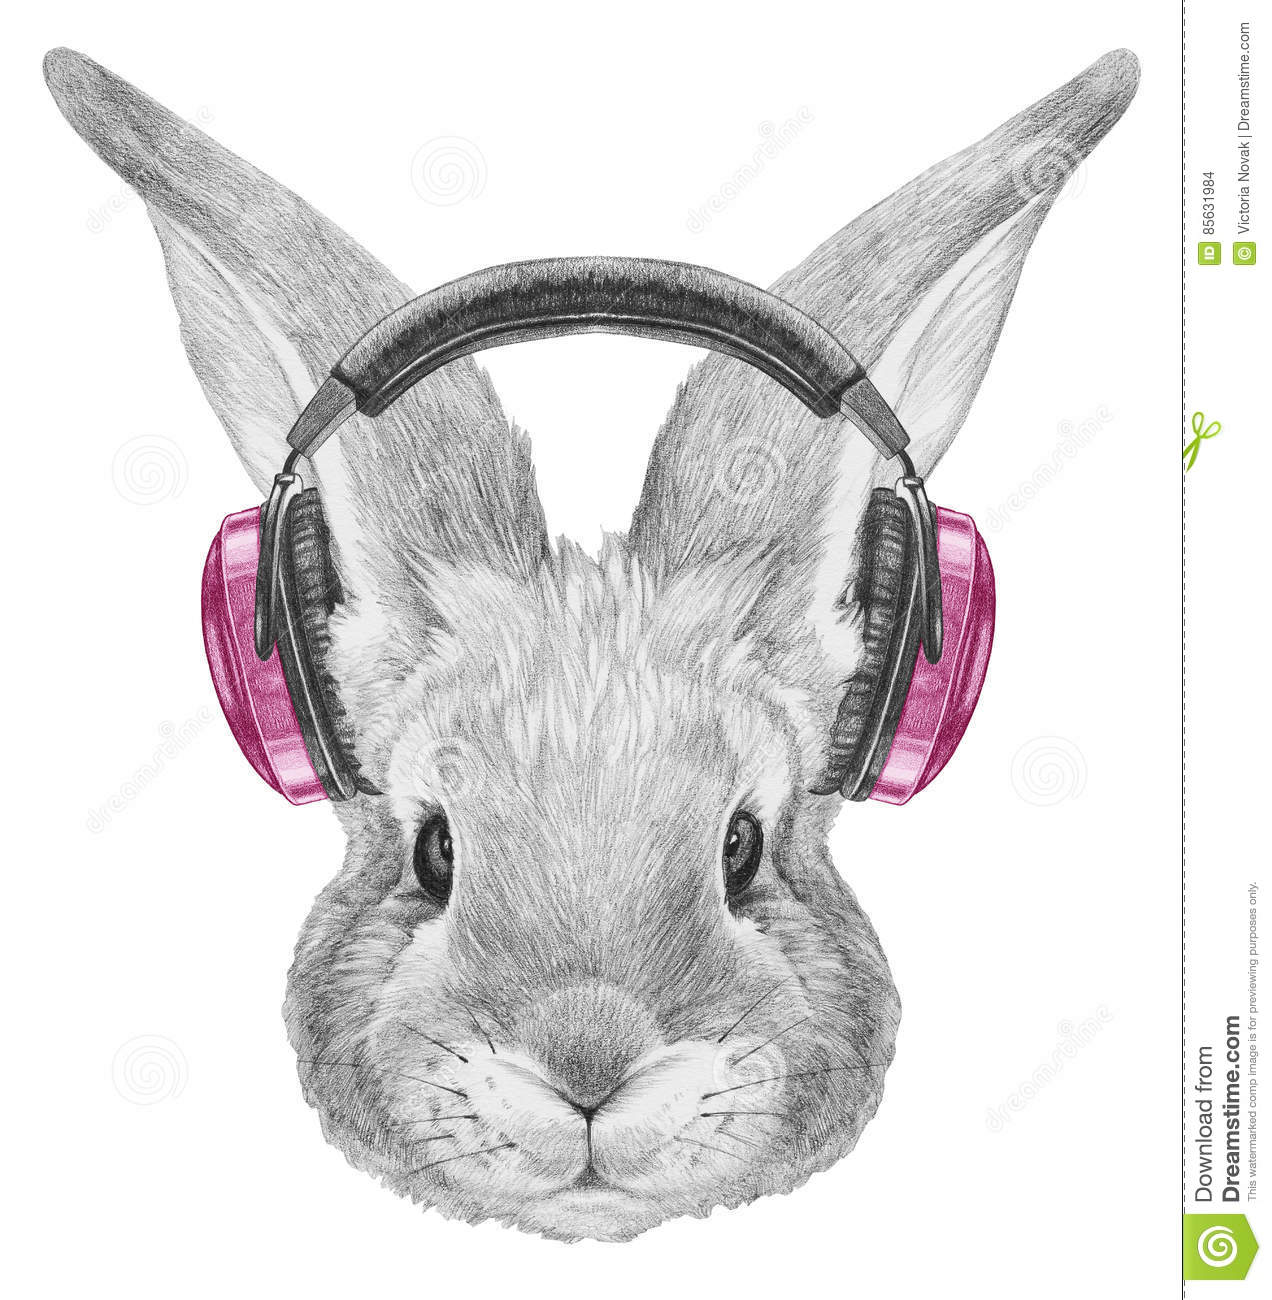 portrait-rabbit-headphones-hand-drawn-illustration-85631984